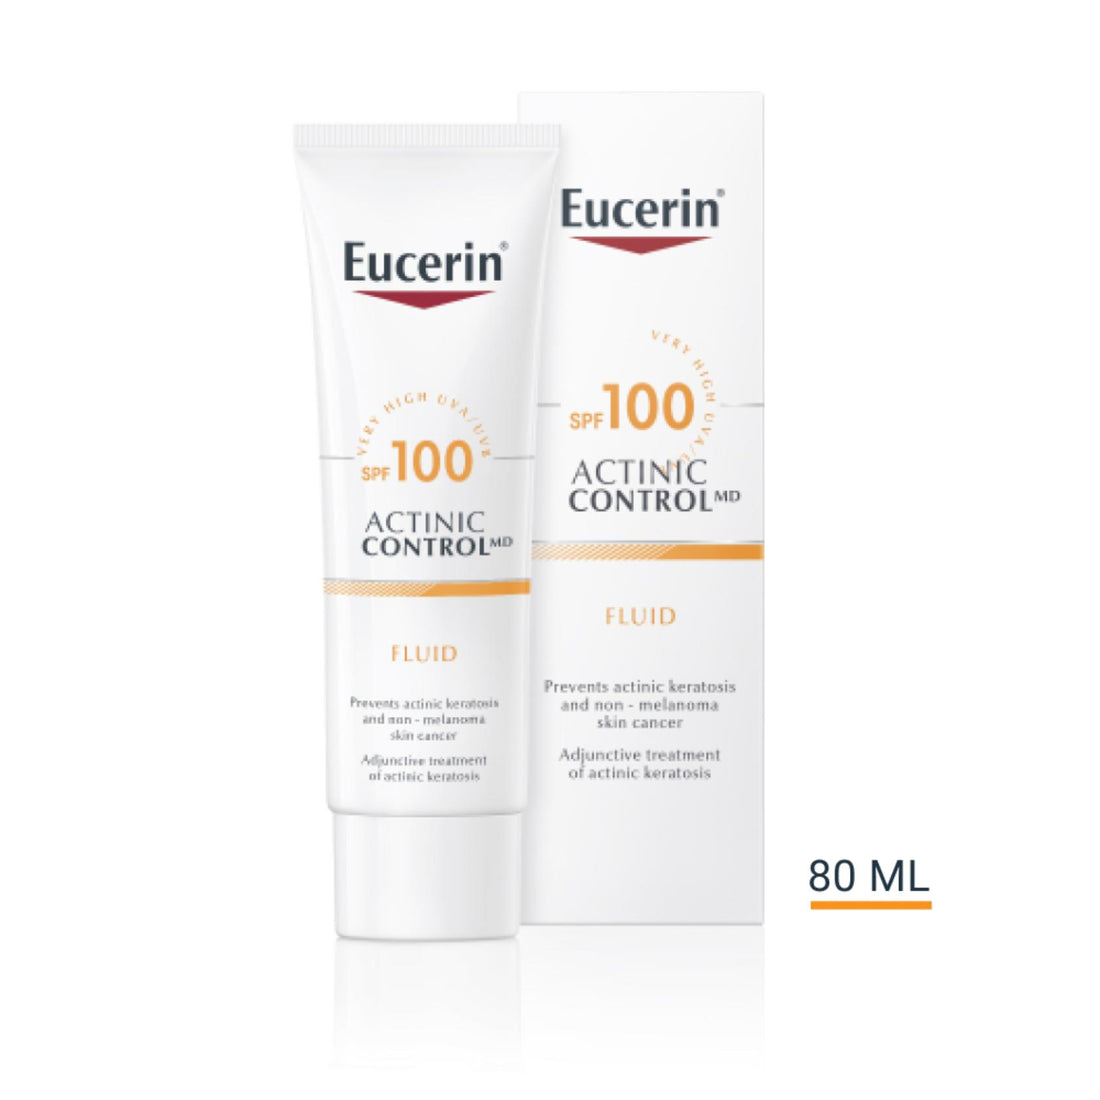 Eucerin Actinic Control MD Fluido SPF100 80ml